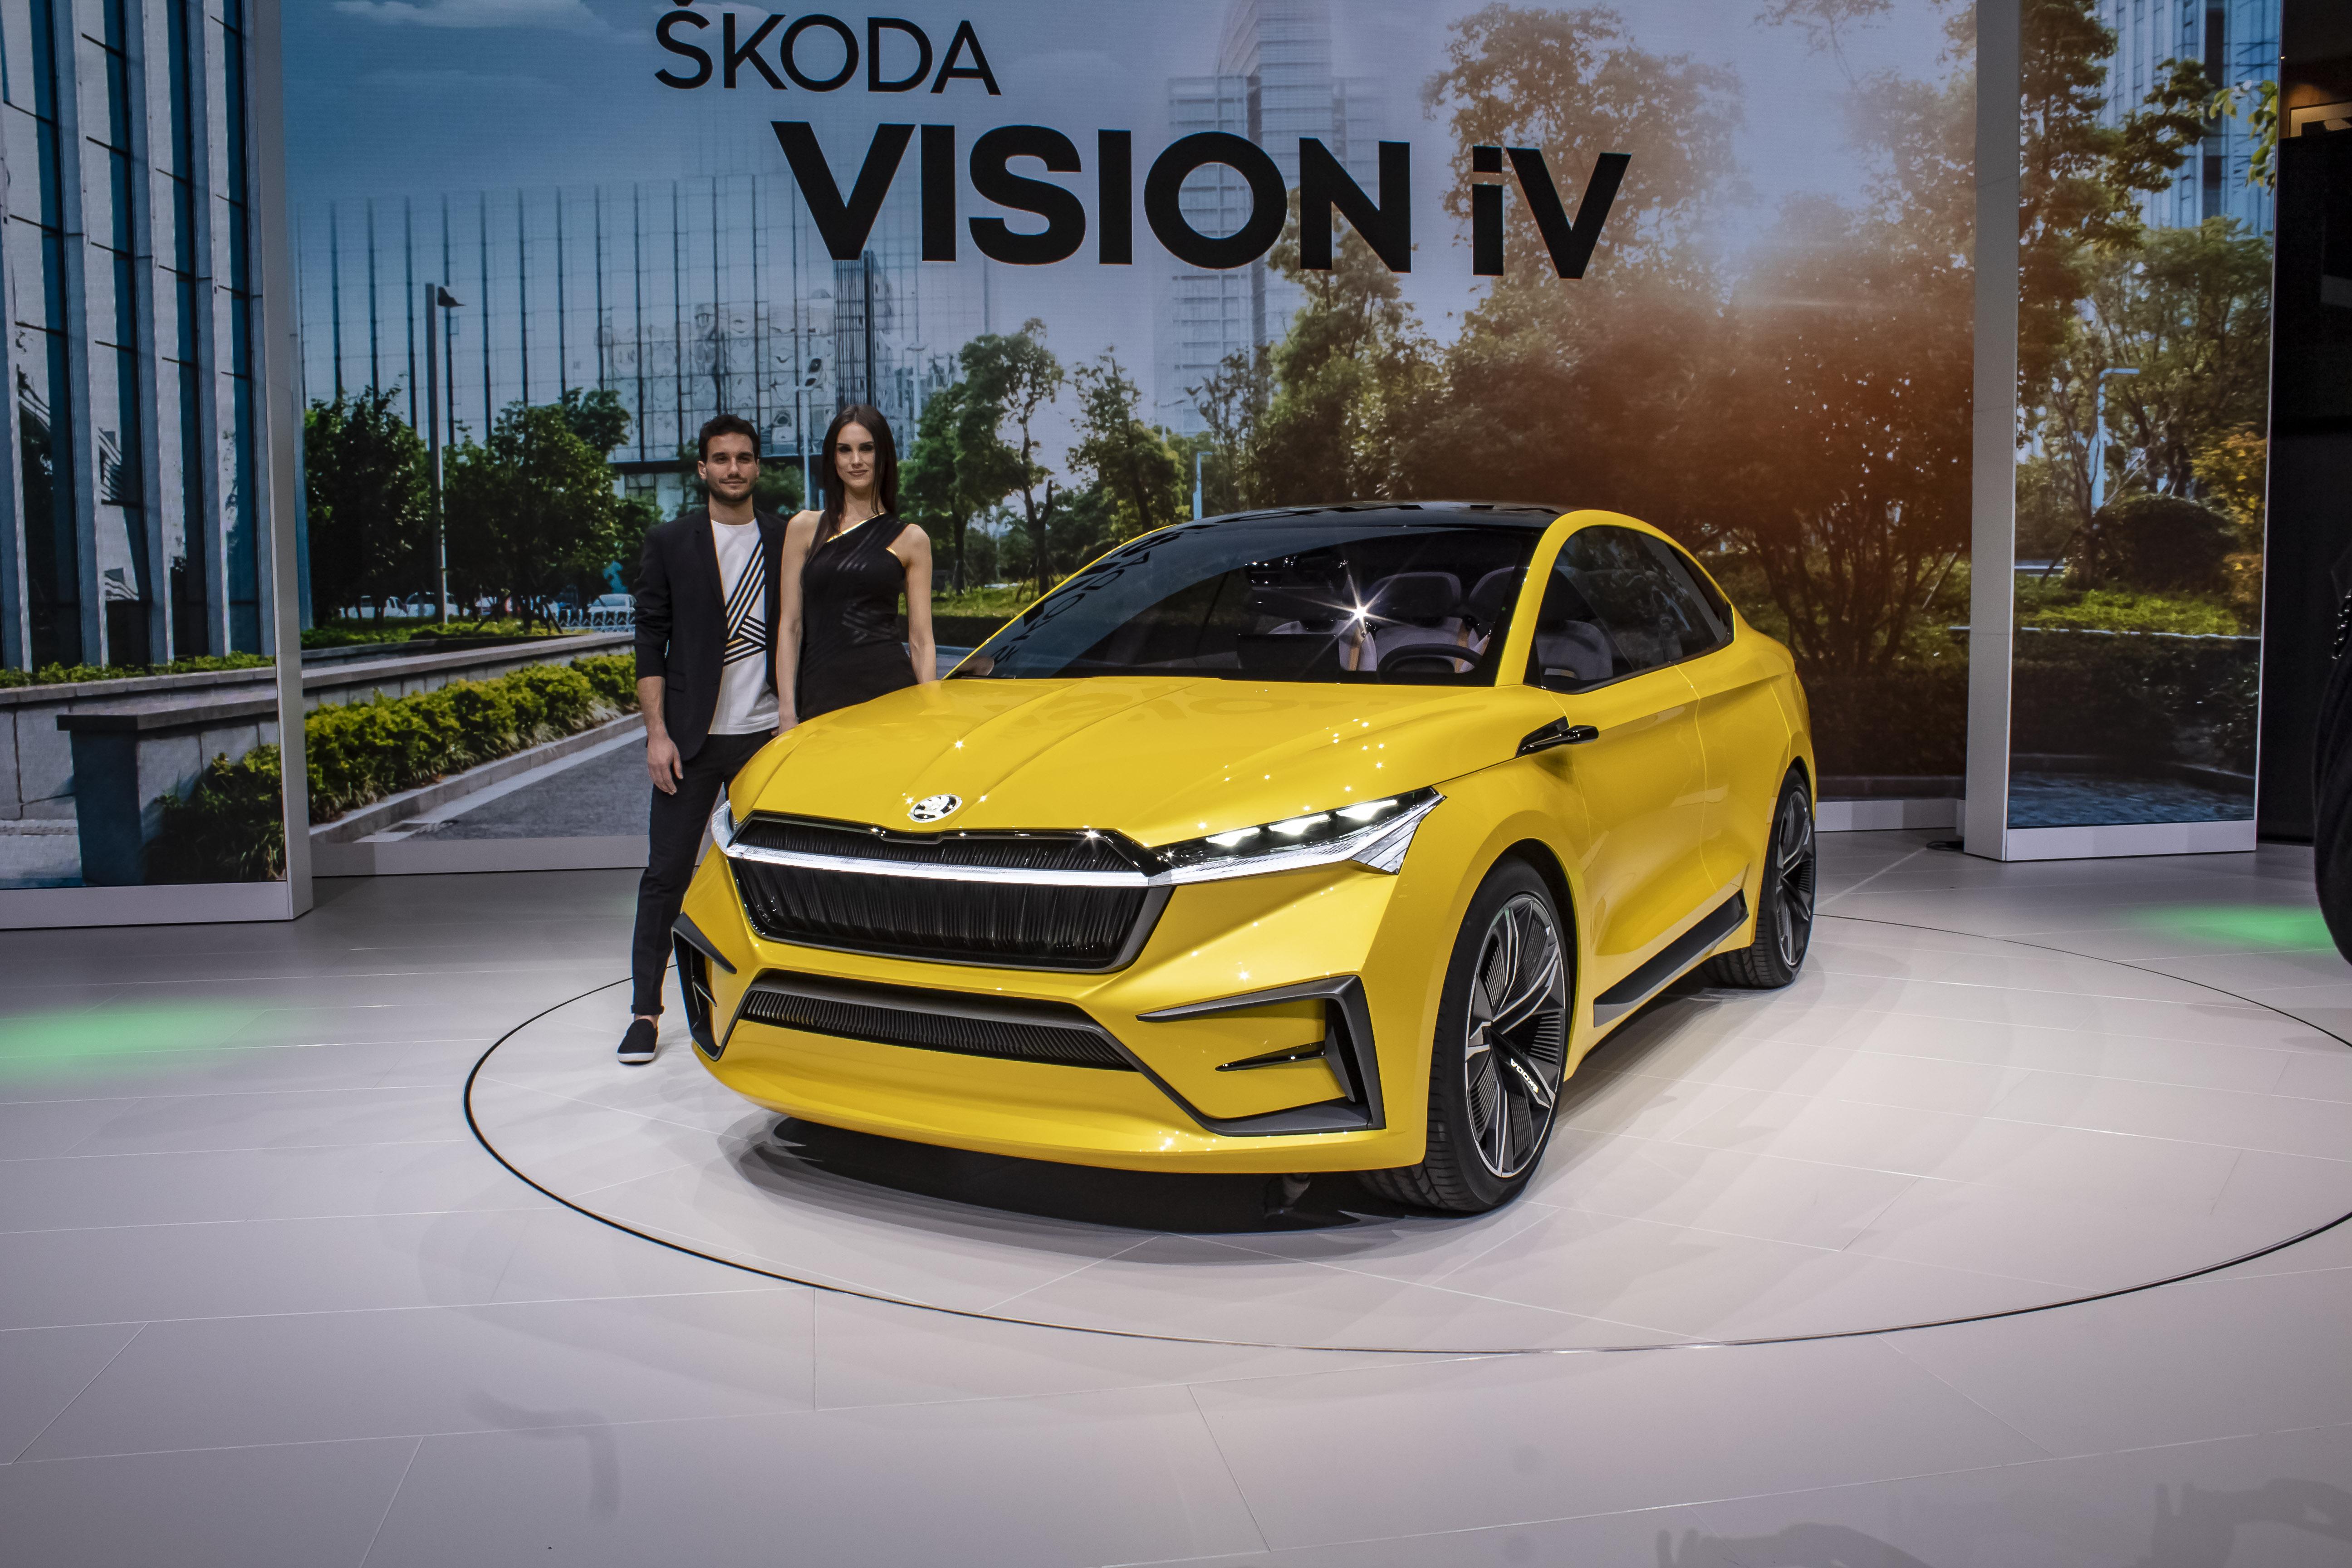 Skoda Vision IV Concept Picture, Photo, Wallpaper